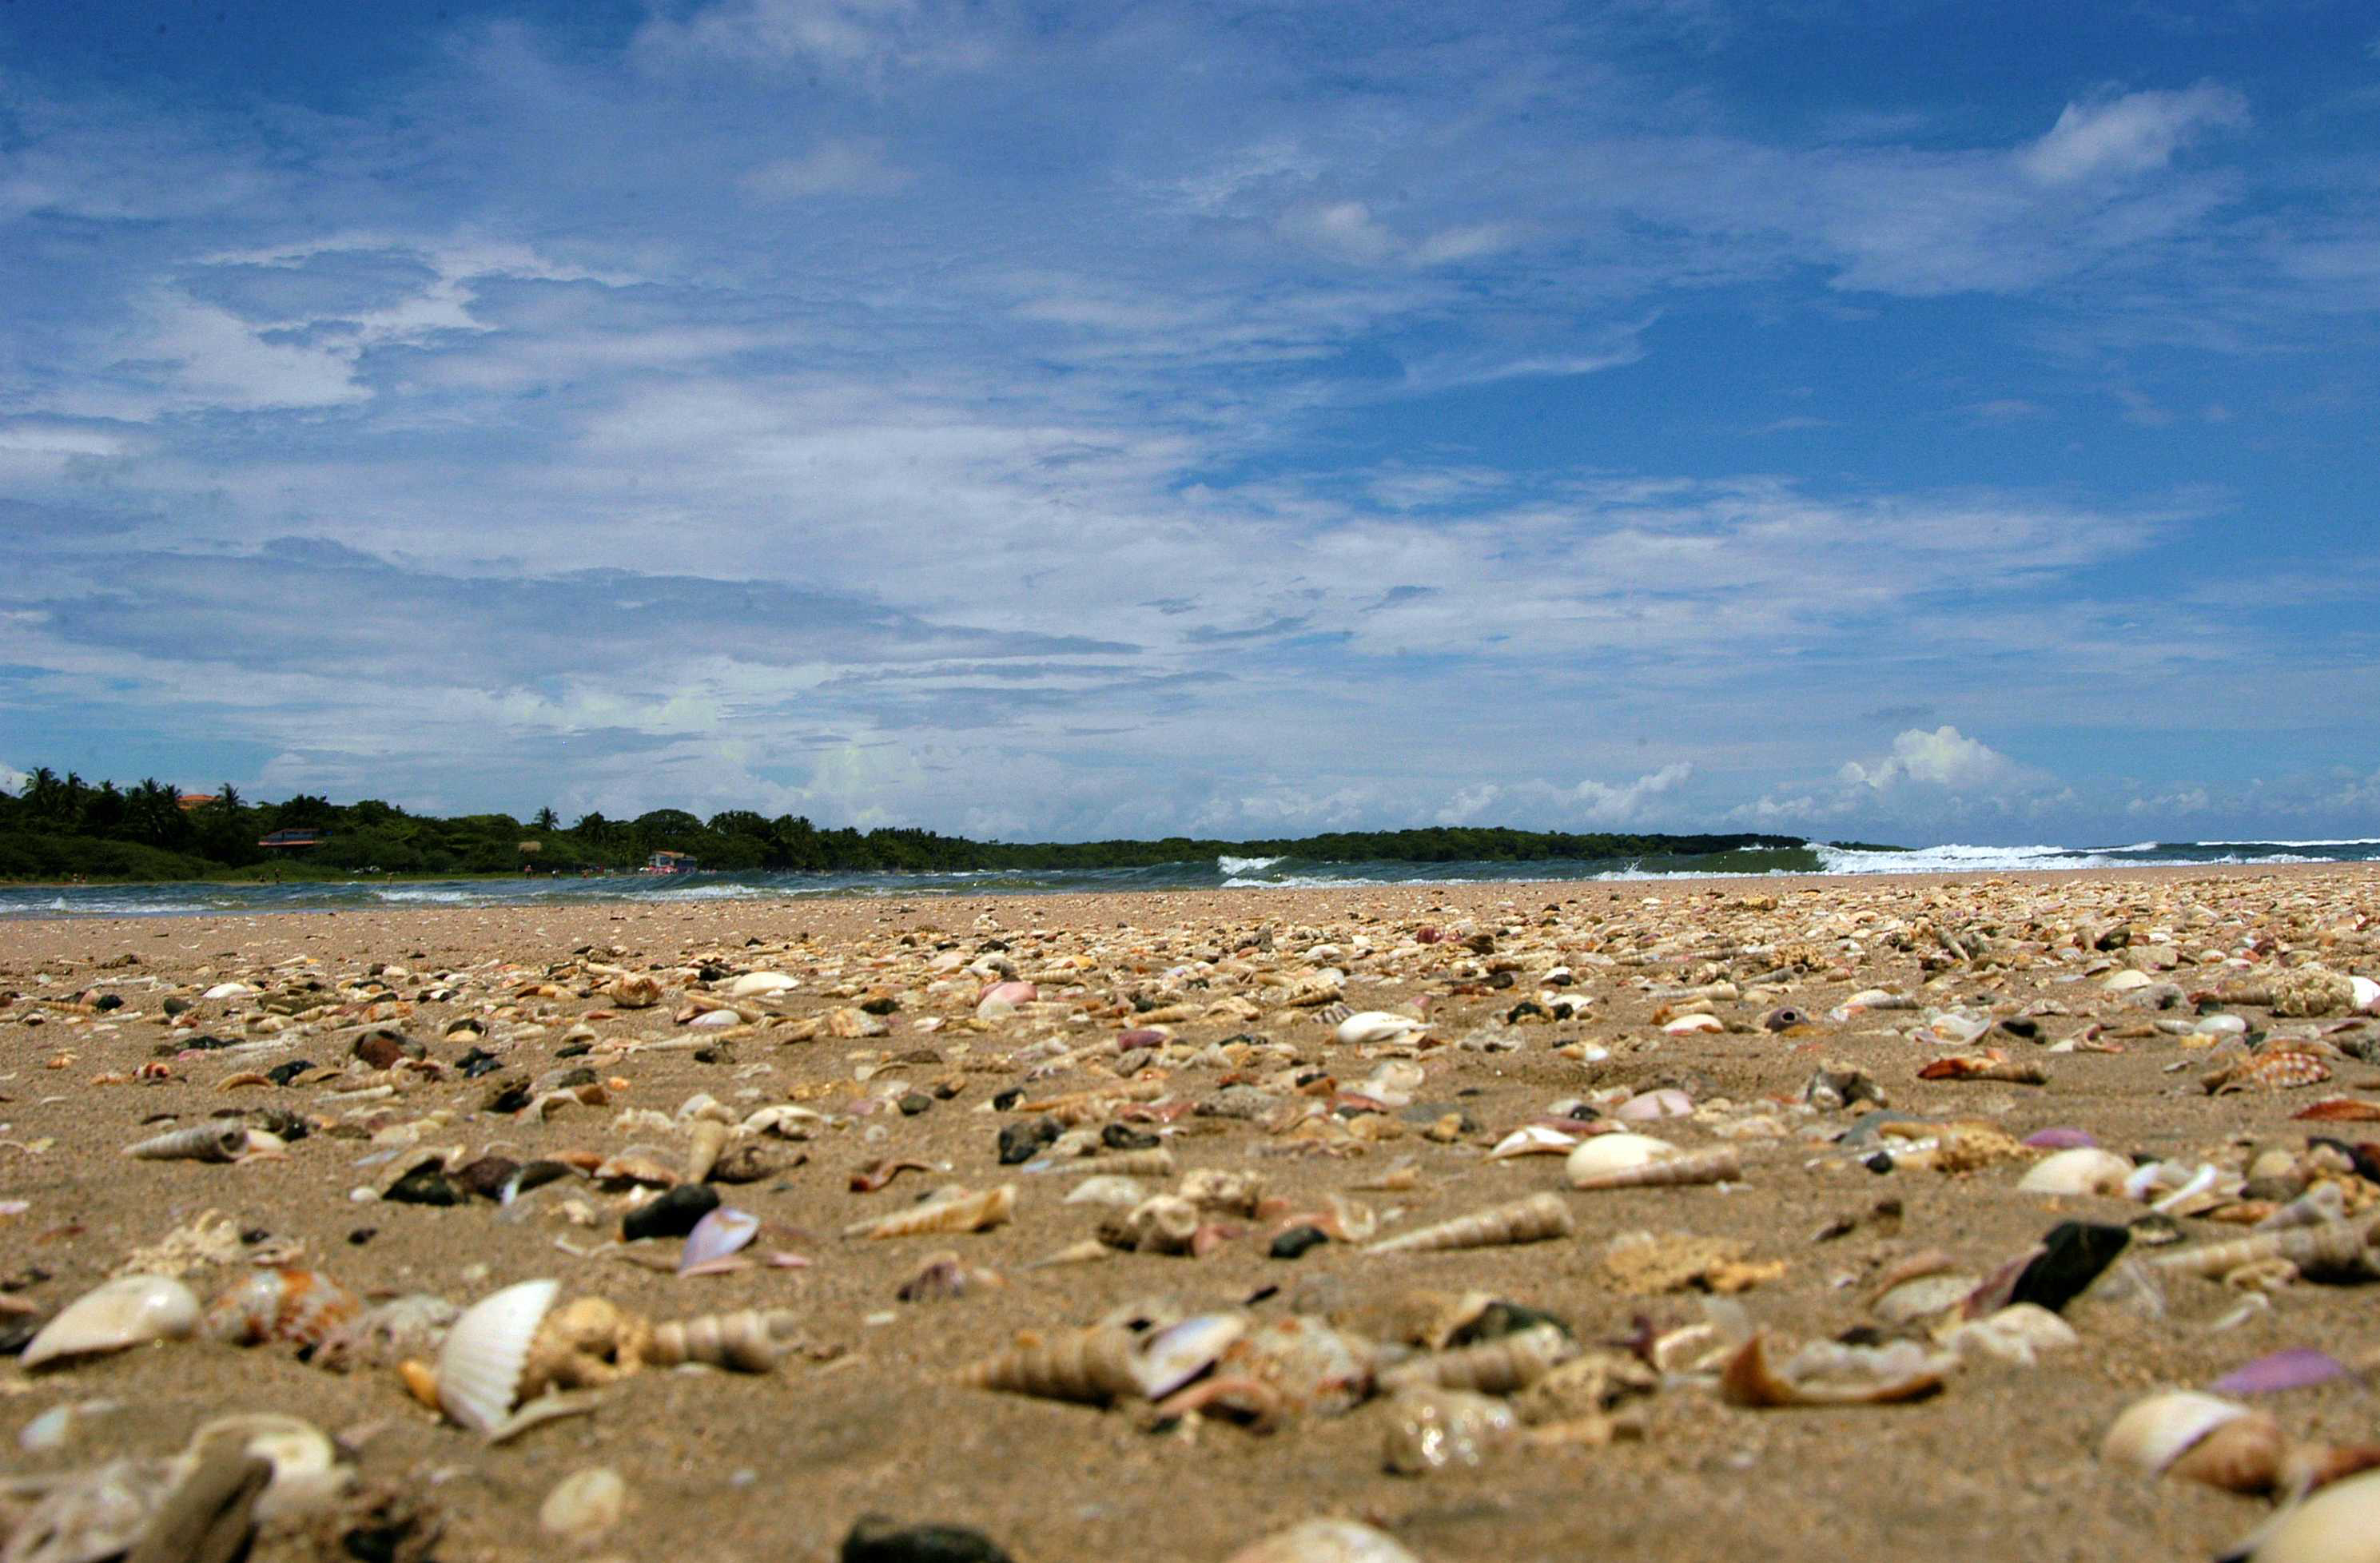  Playa Grande Seashells in the sand